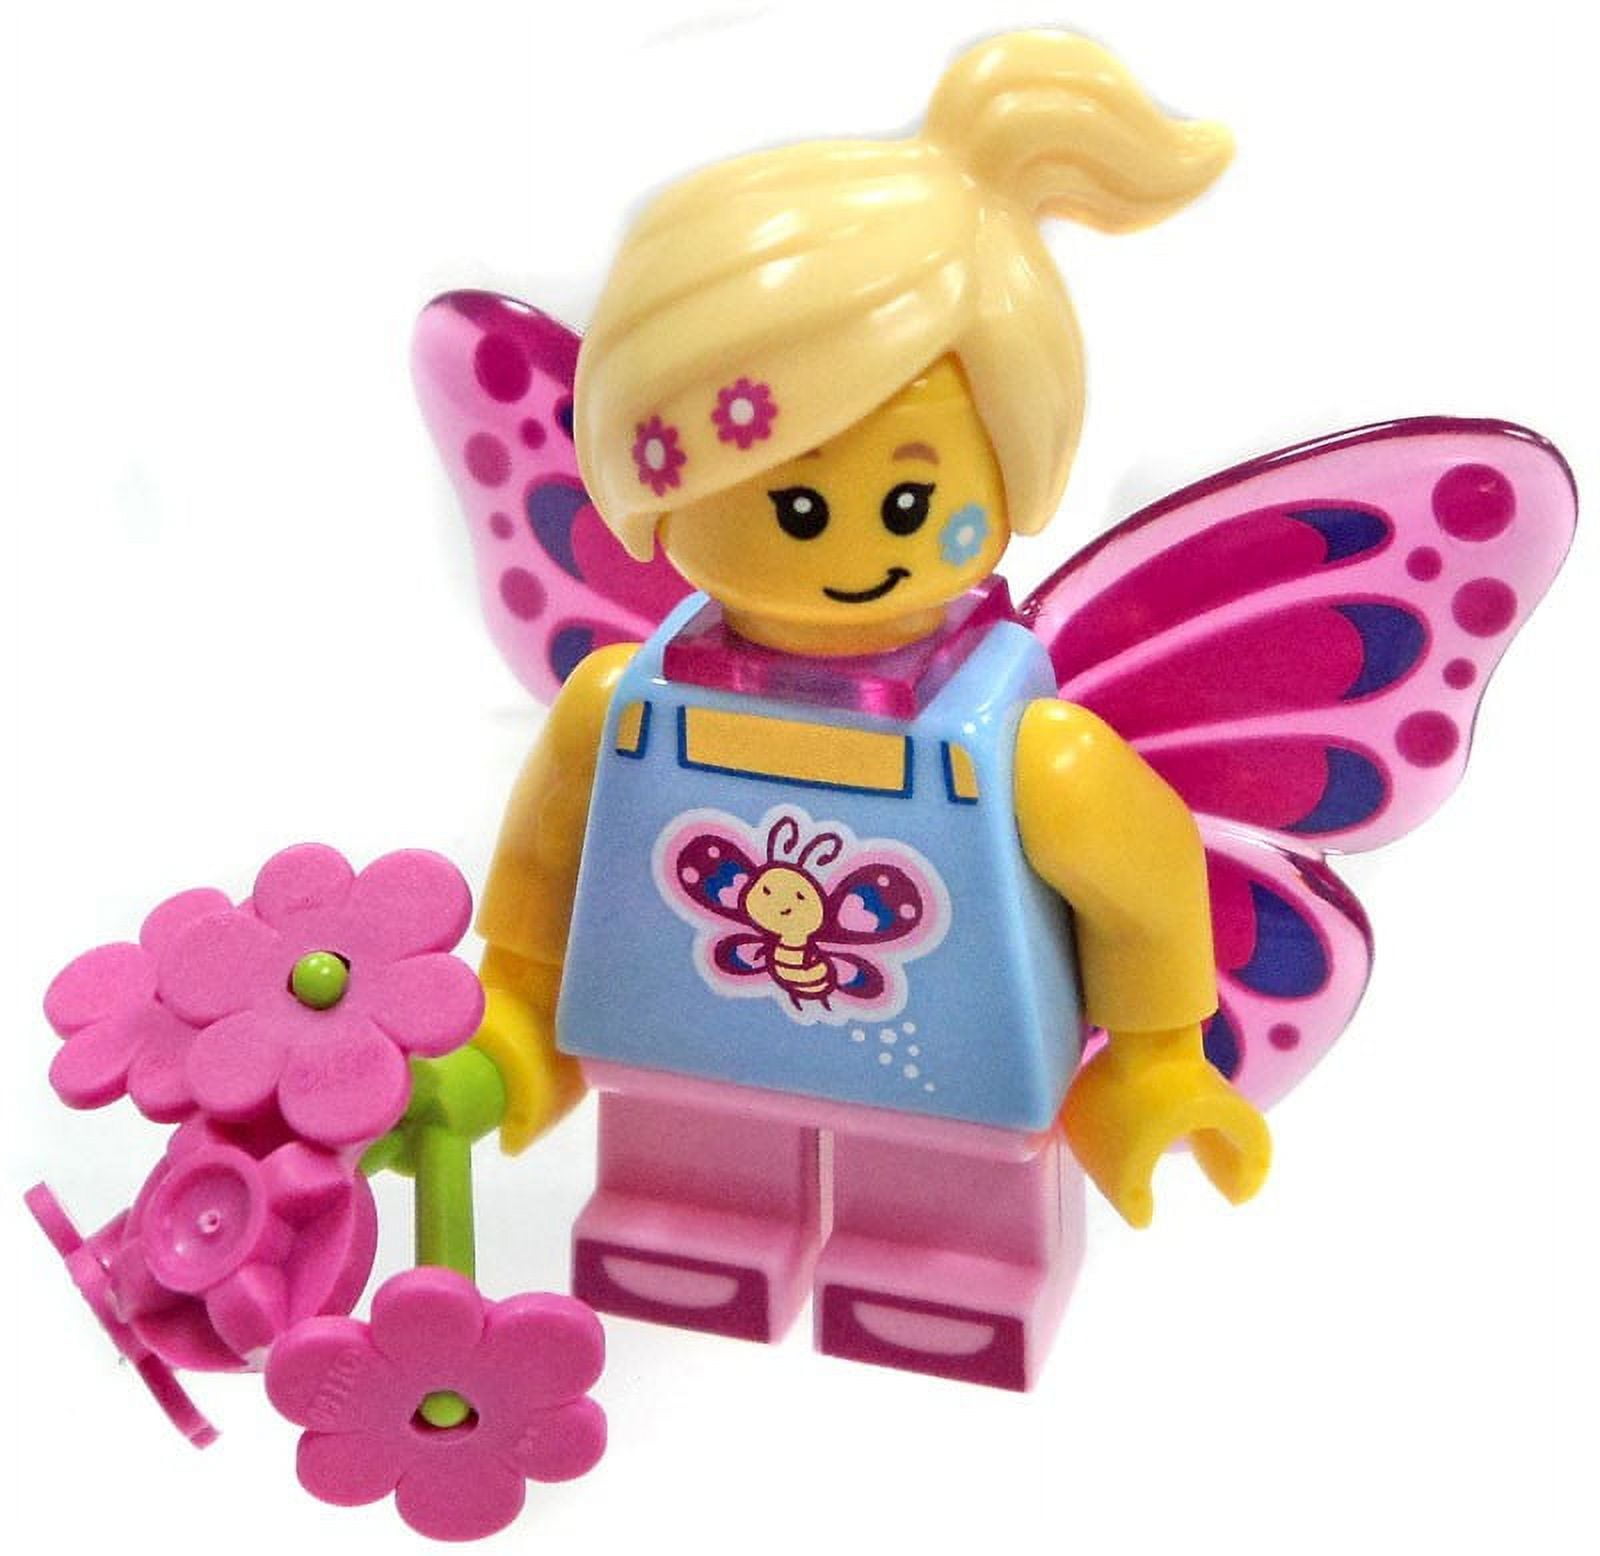 Lego version girly